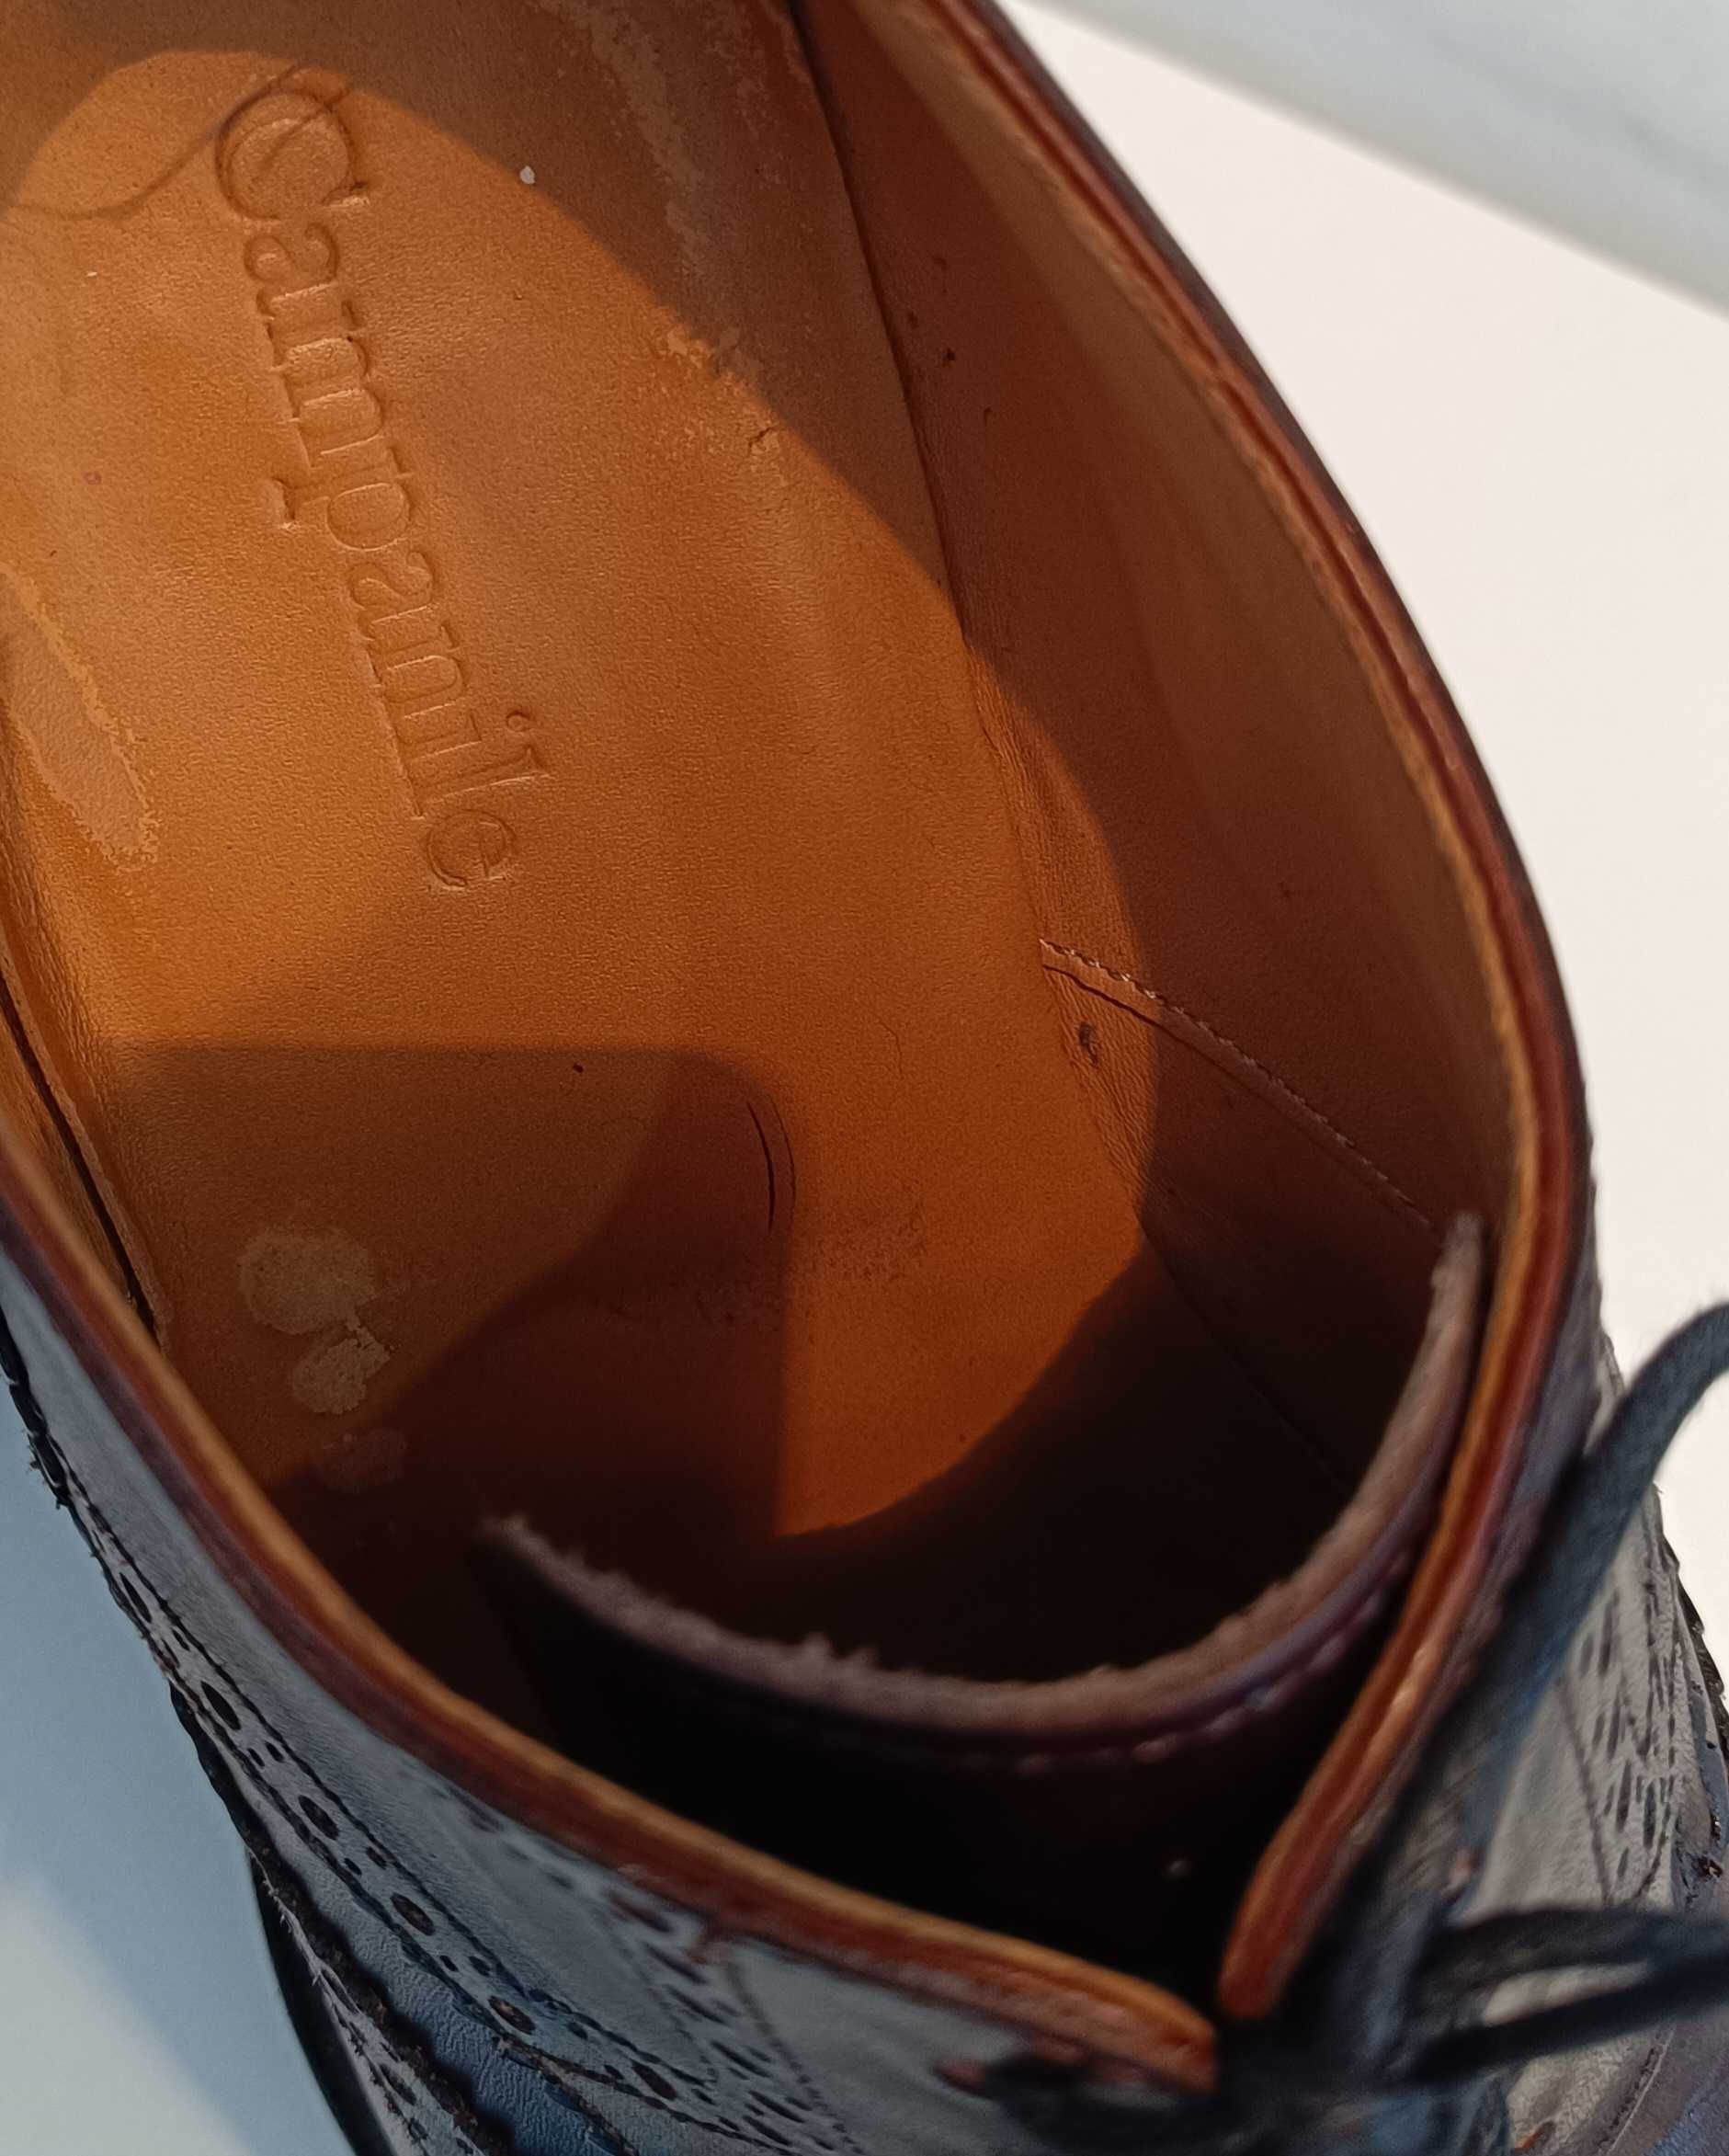 Pantofi derby 41 41.5 brogue lucrati manual Campanile piele naturala